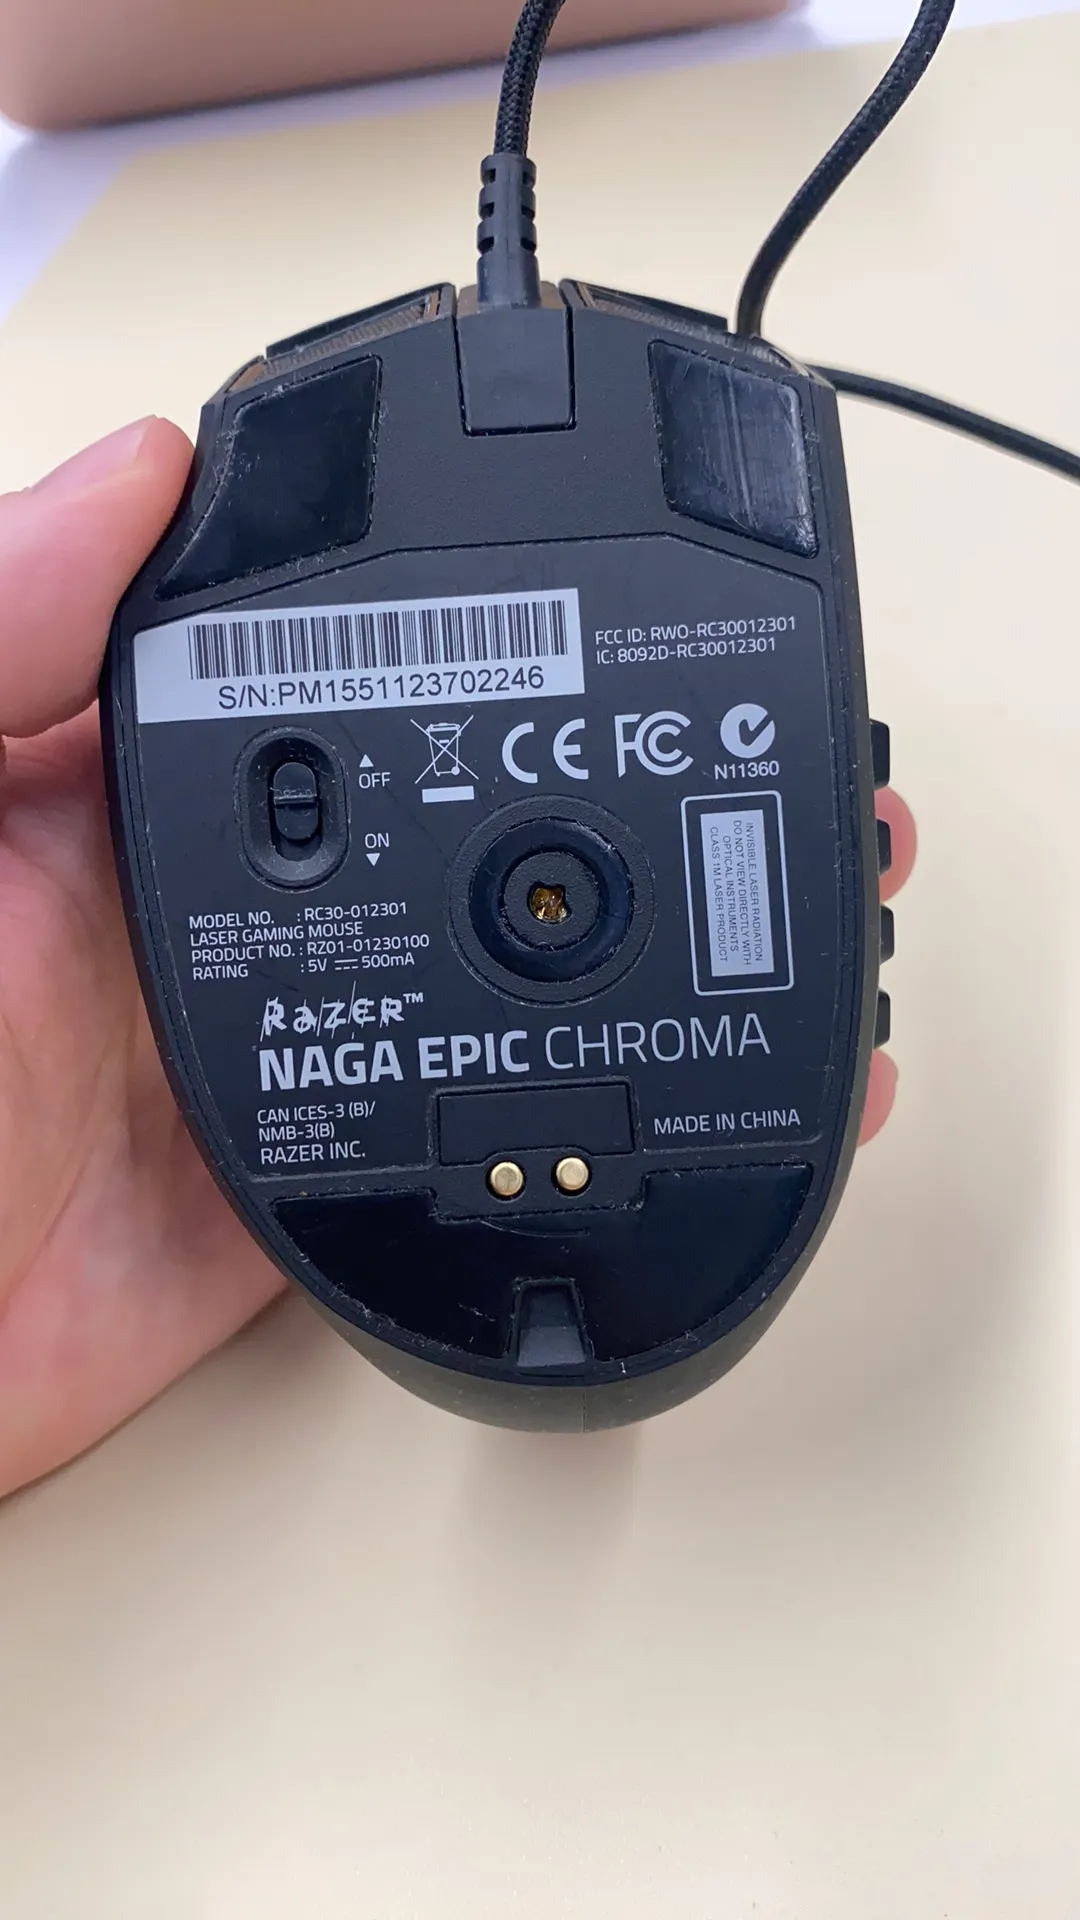 Razer Naga Epic Chroma media